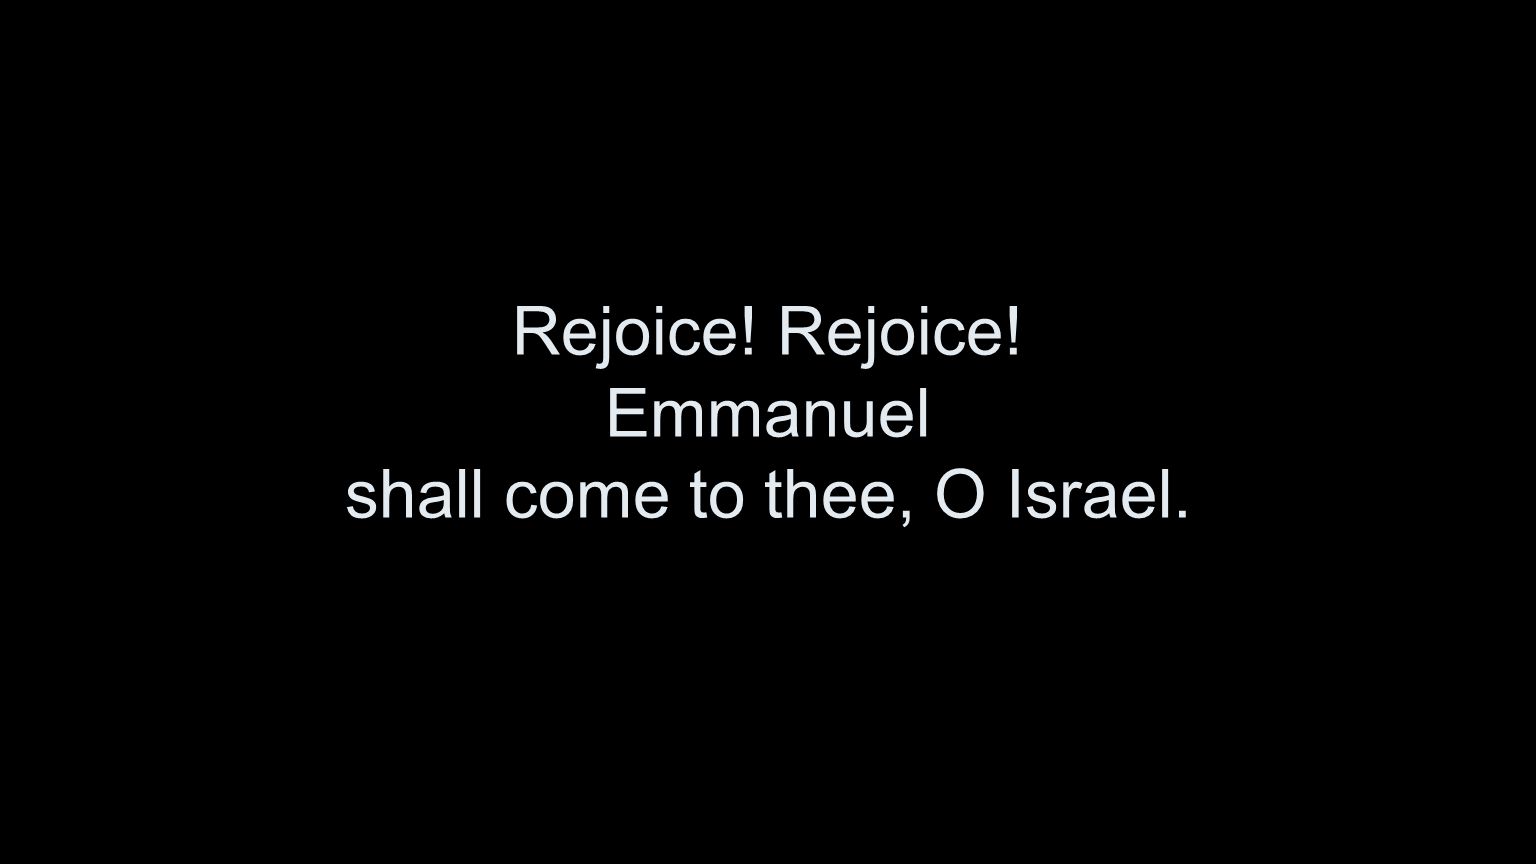 Rejoice! Rejoice! Emmanuel shall come to thee, O Israel.